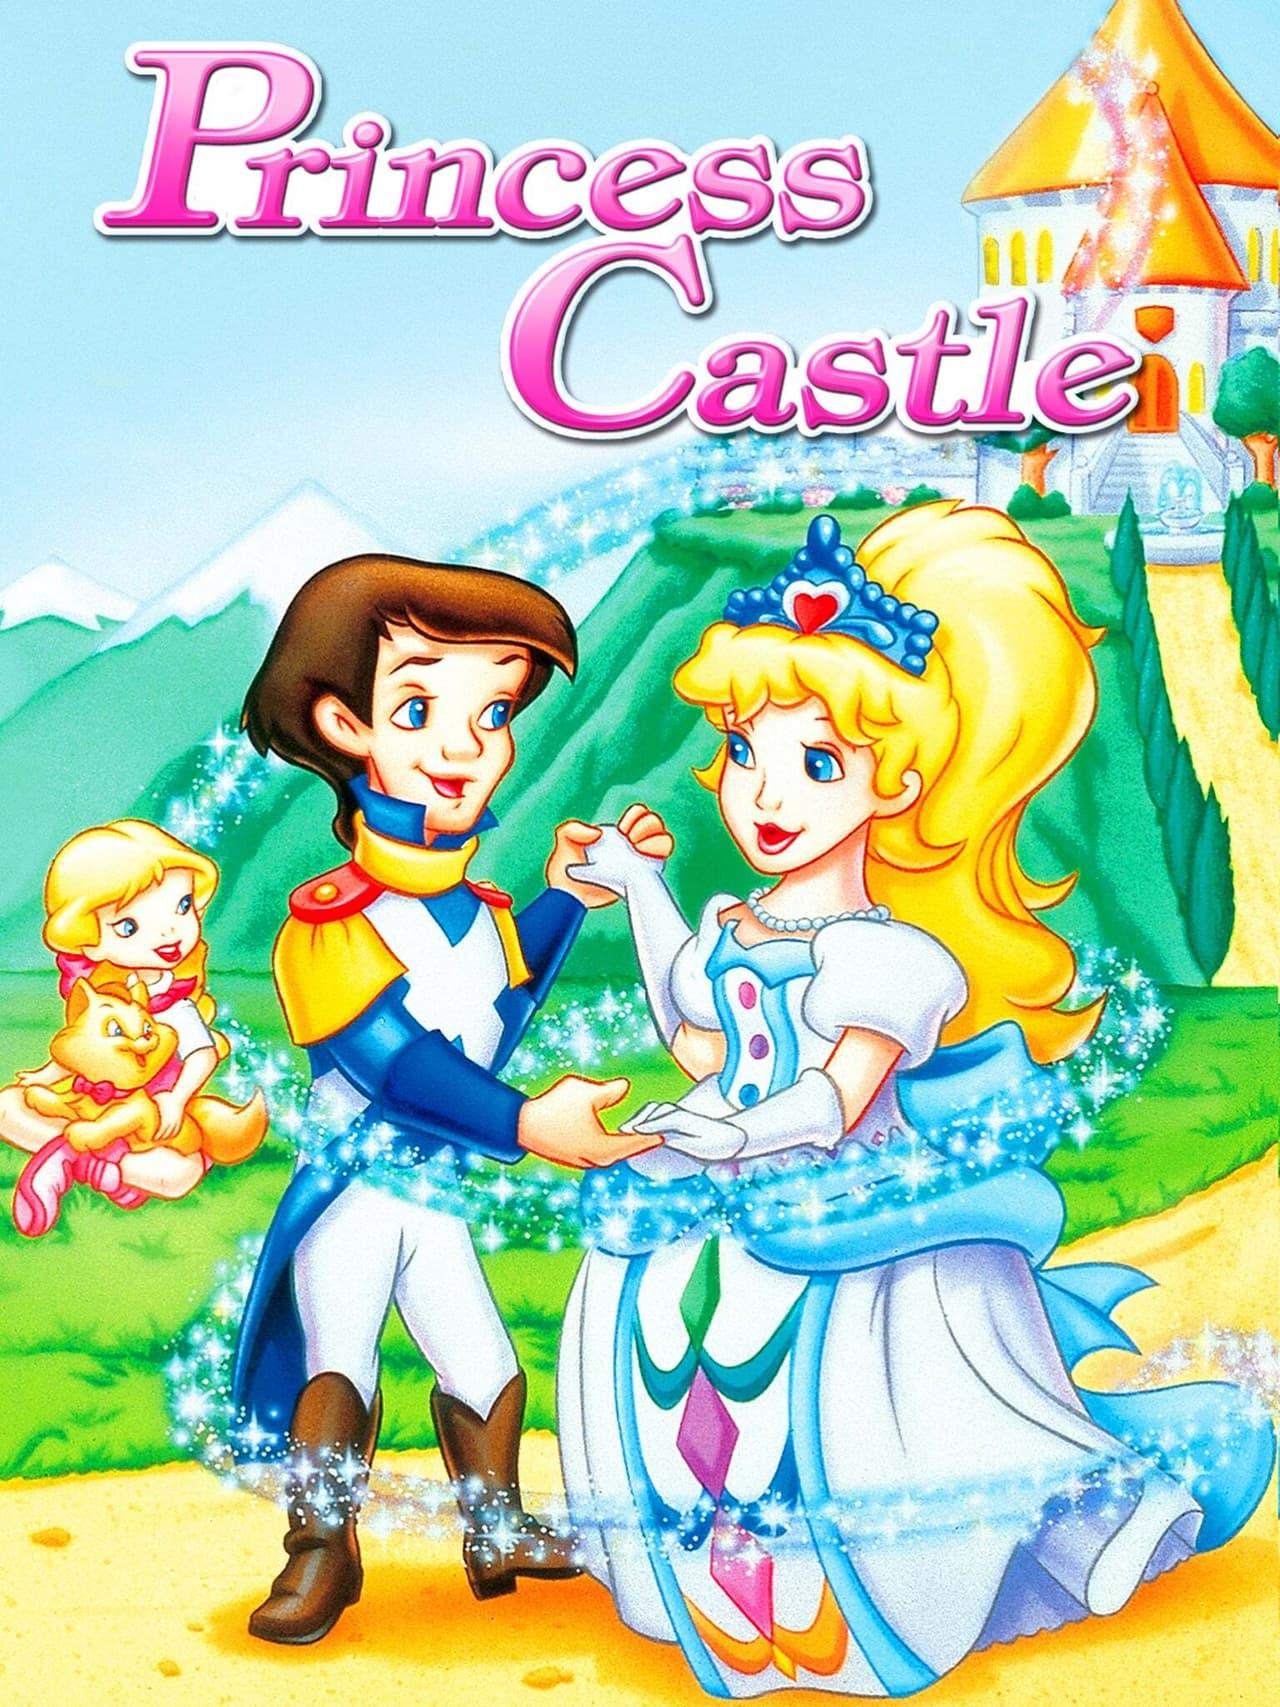 The Princess Castle poster